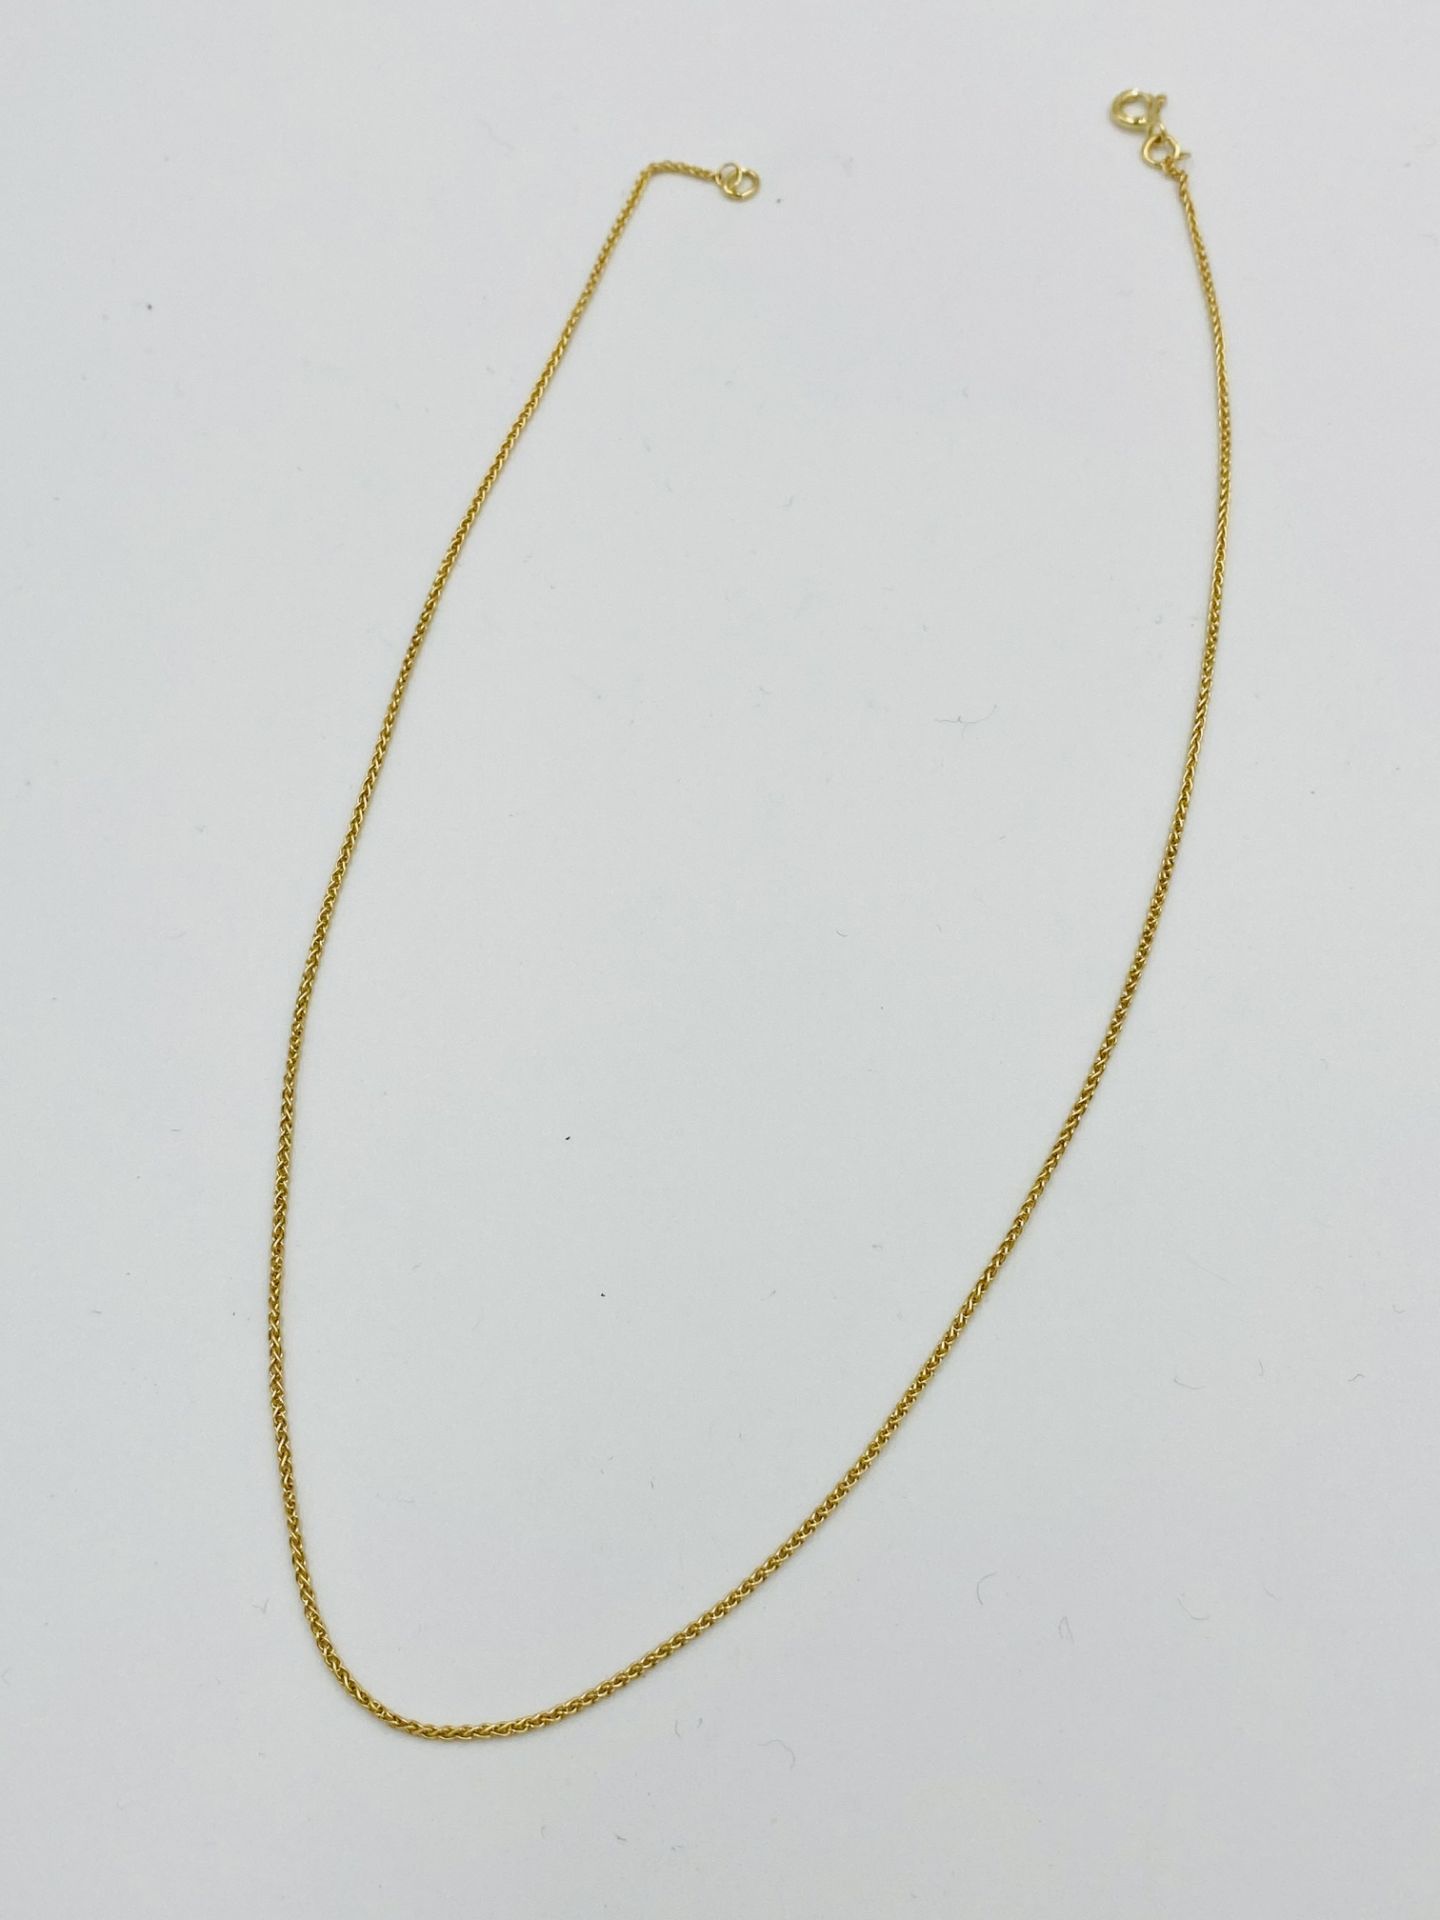 18ct gold fine chain - Image 4 of 4